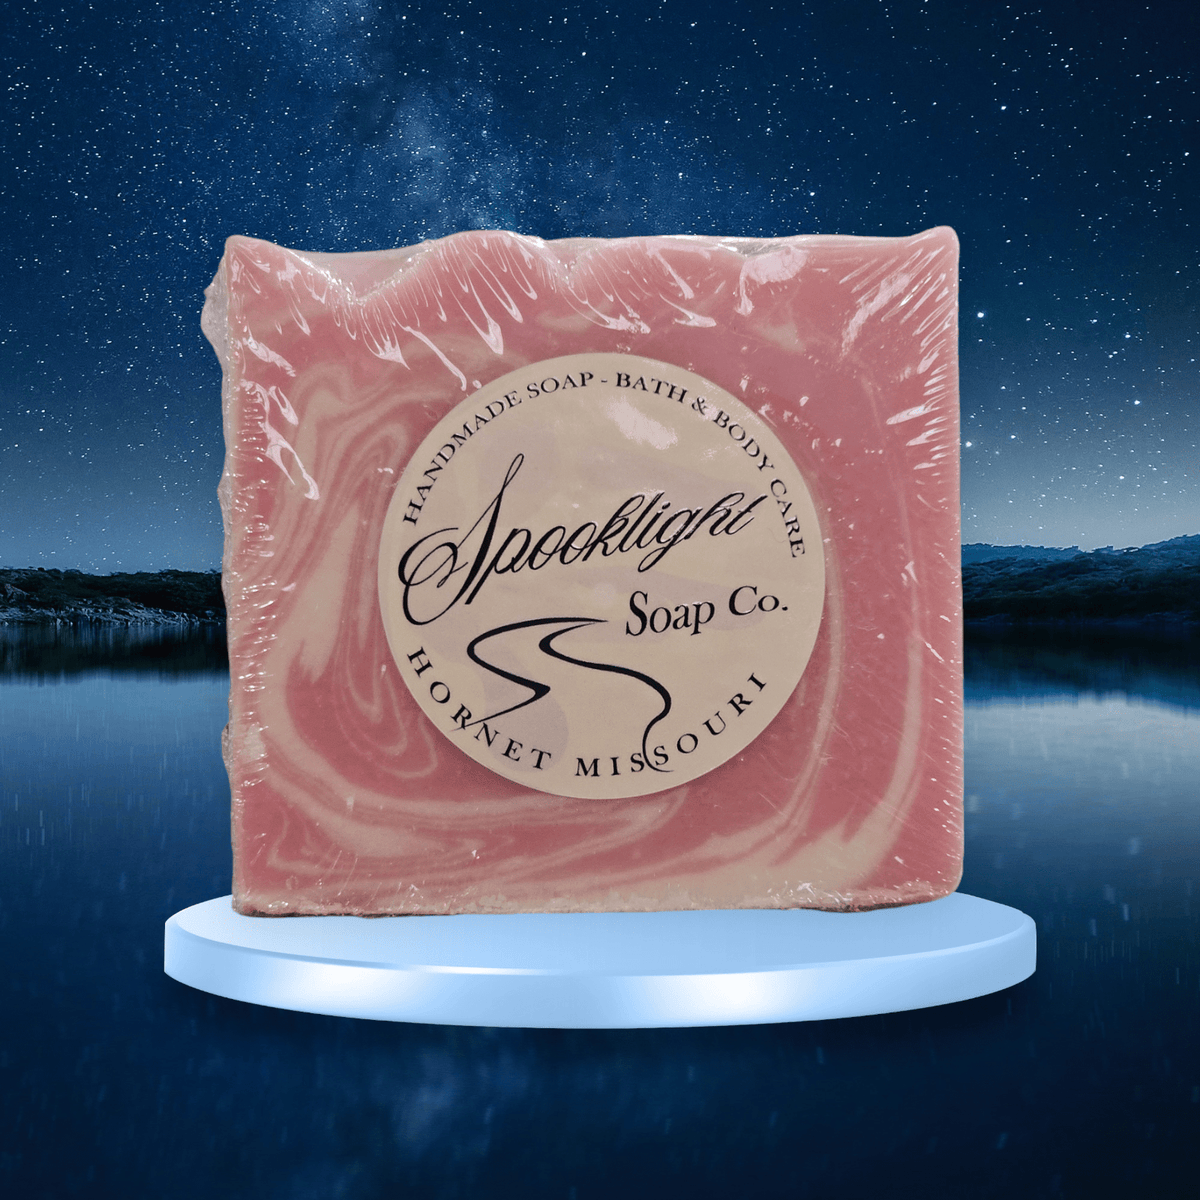 Jasmine Nightfall Symphony Soap | Oak & Moss Scented | Luxurious Coconut Milk Bar by Spooklight Soap Co.